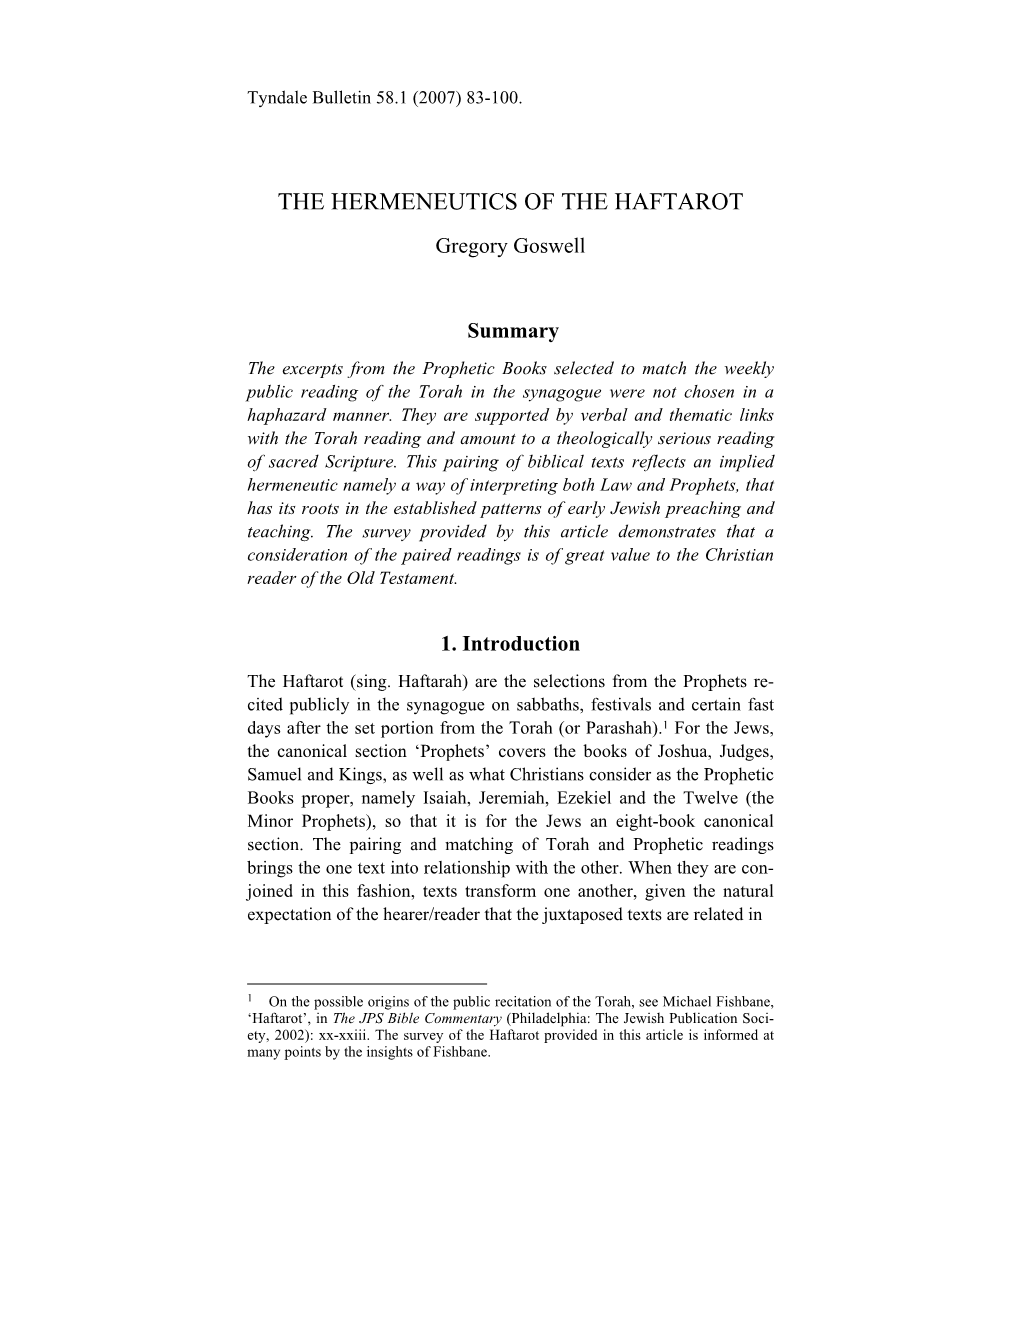 THE HERMENEUTICS of the HAFTAROT Gregory Goswell